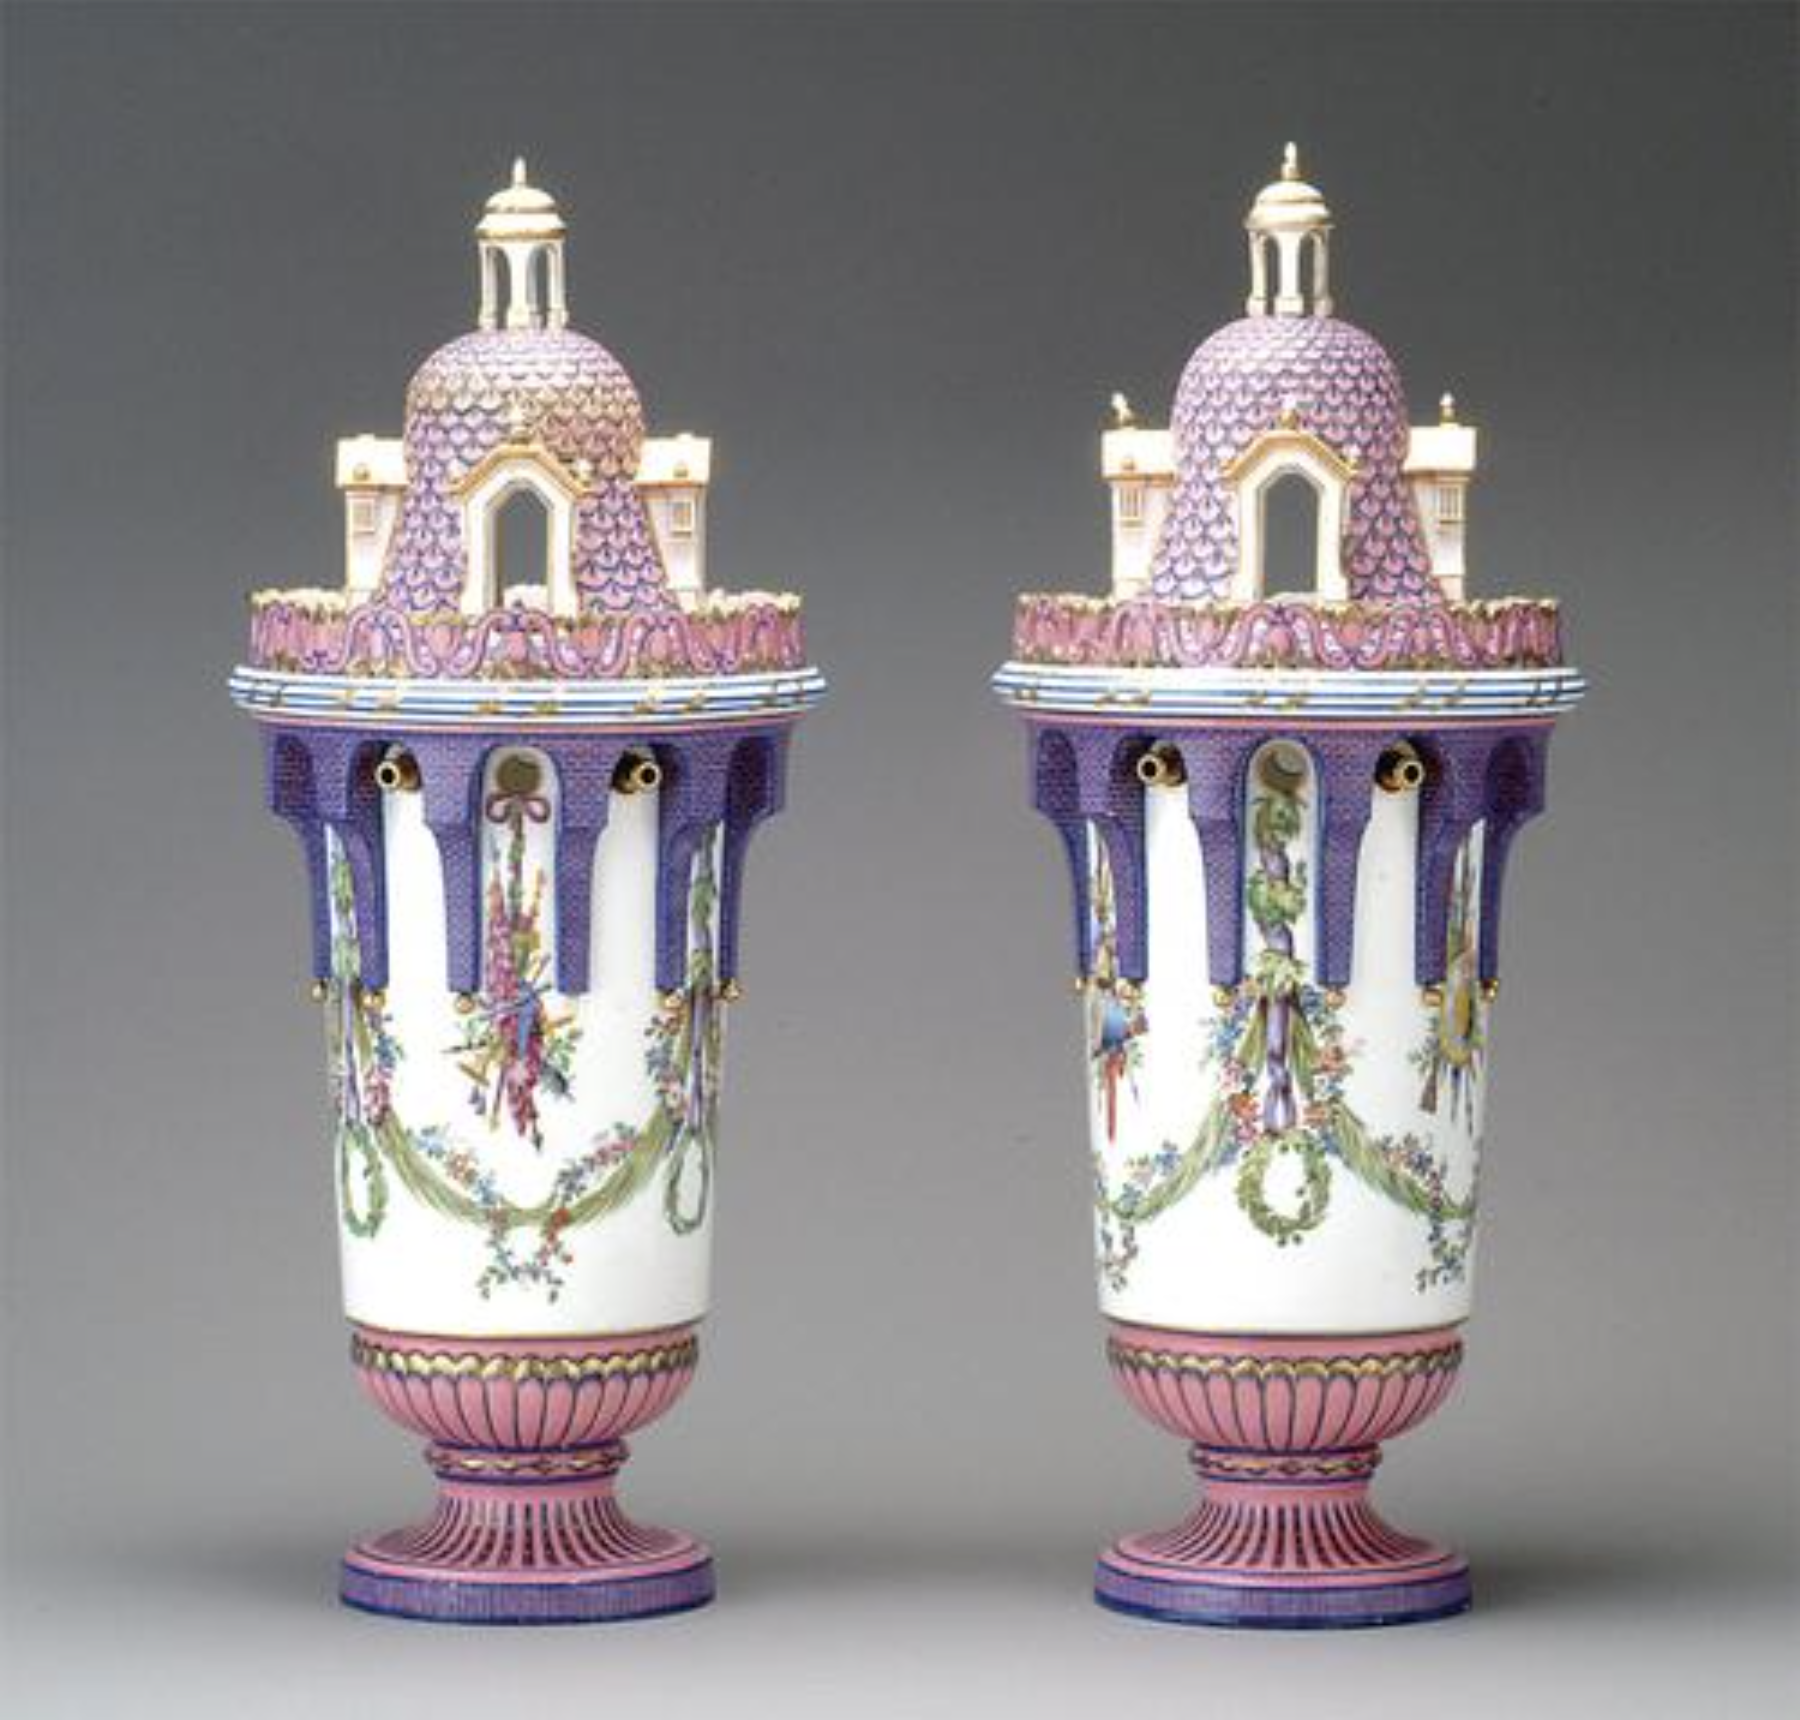 Sevre Porcelain covered vase ca. 1762 courtesy of the Huntington Art Museum, San Marino, California